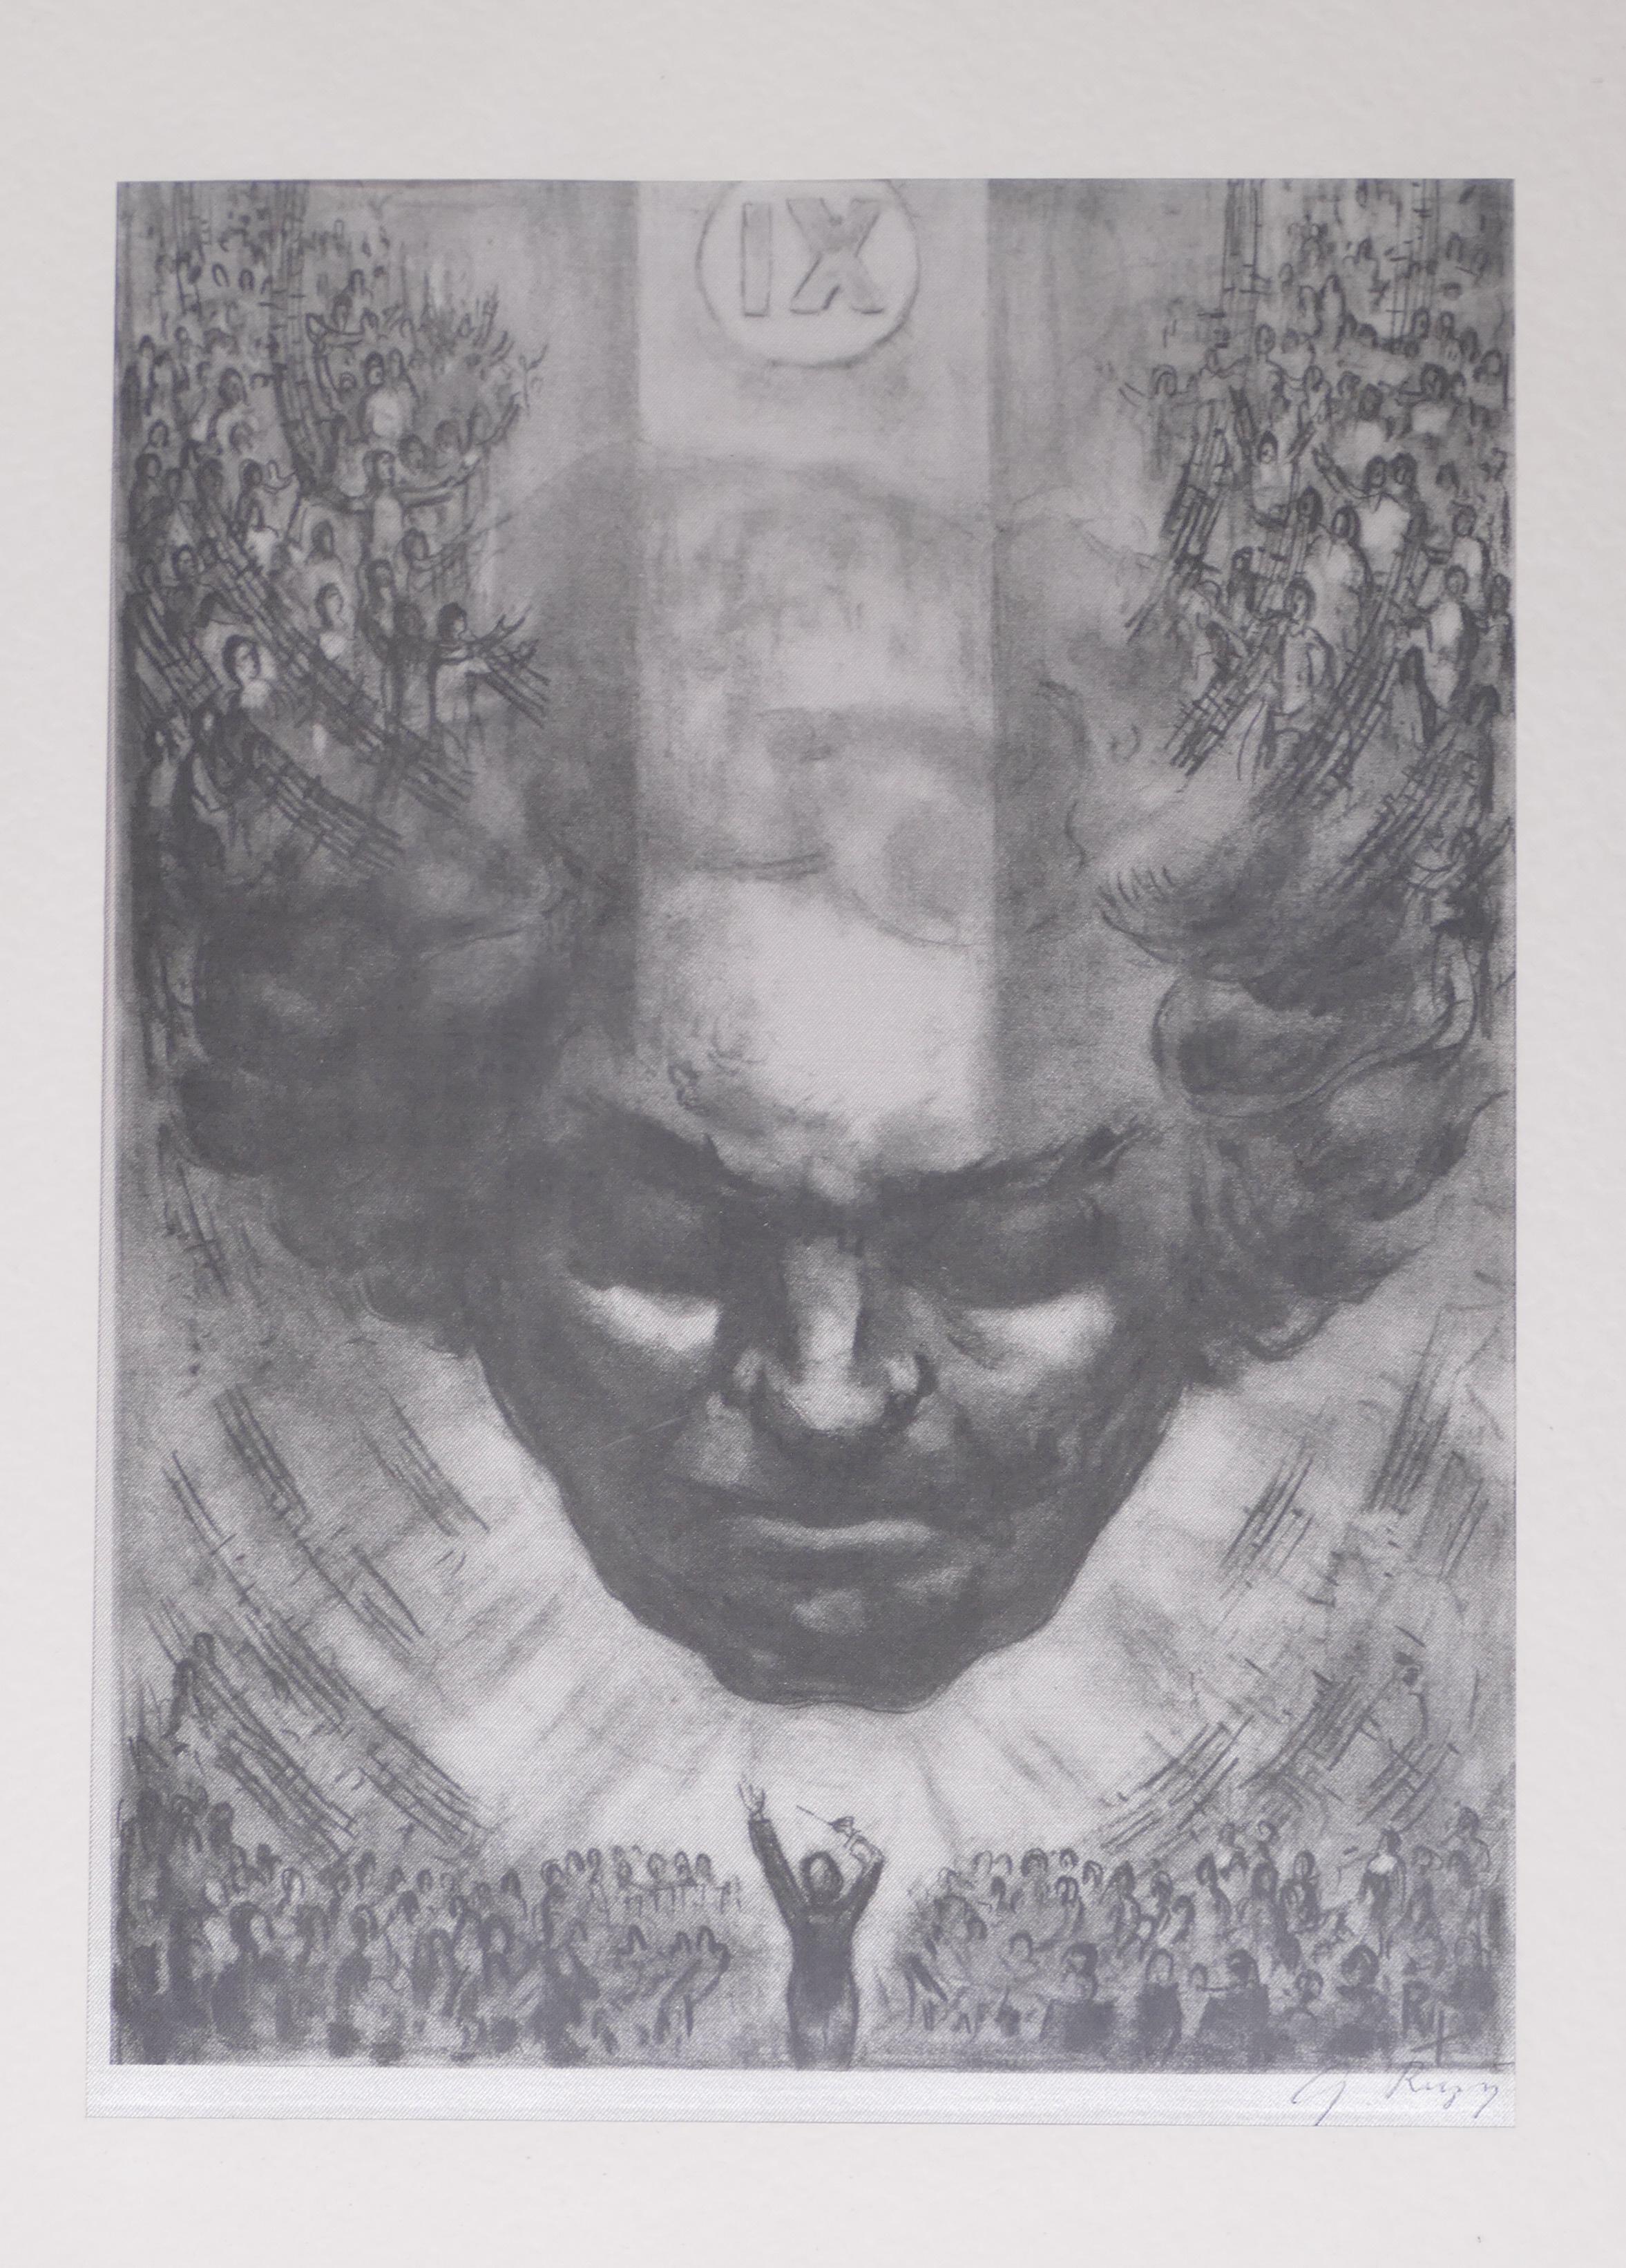 Unknown Portrait Print - Beethoven - IX Sinfonie - Original Etching by German Master 20th Century